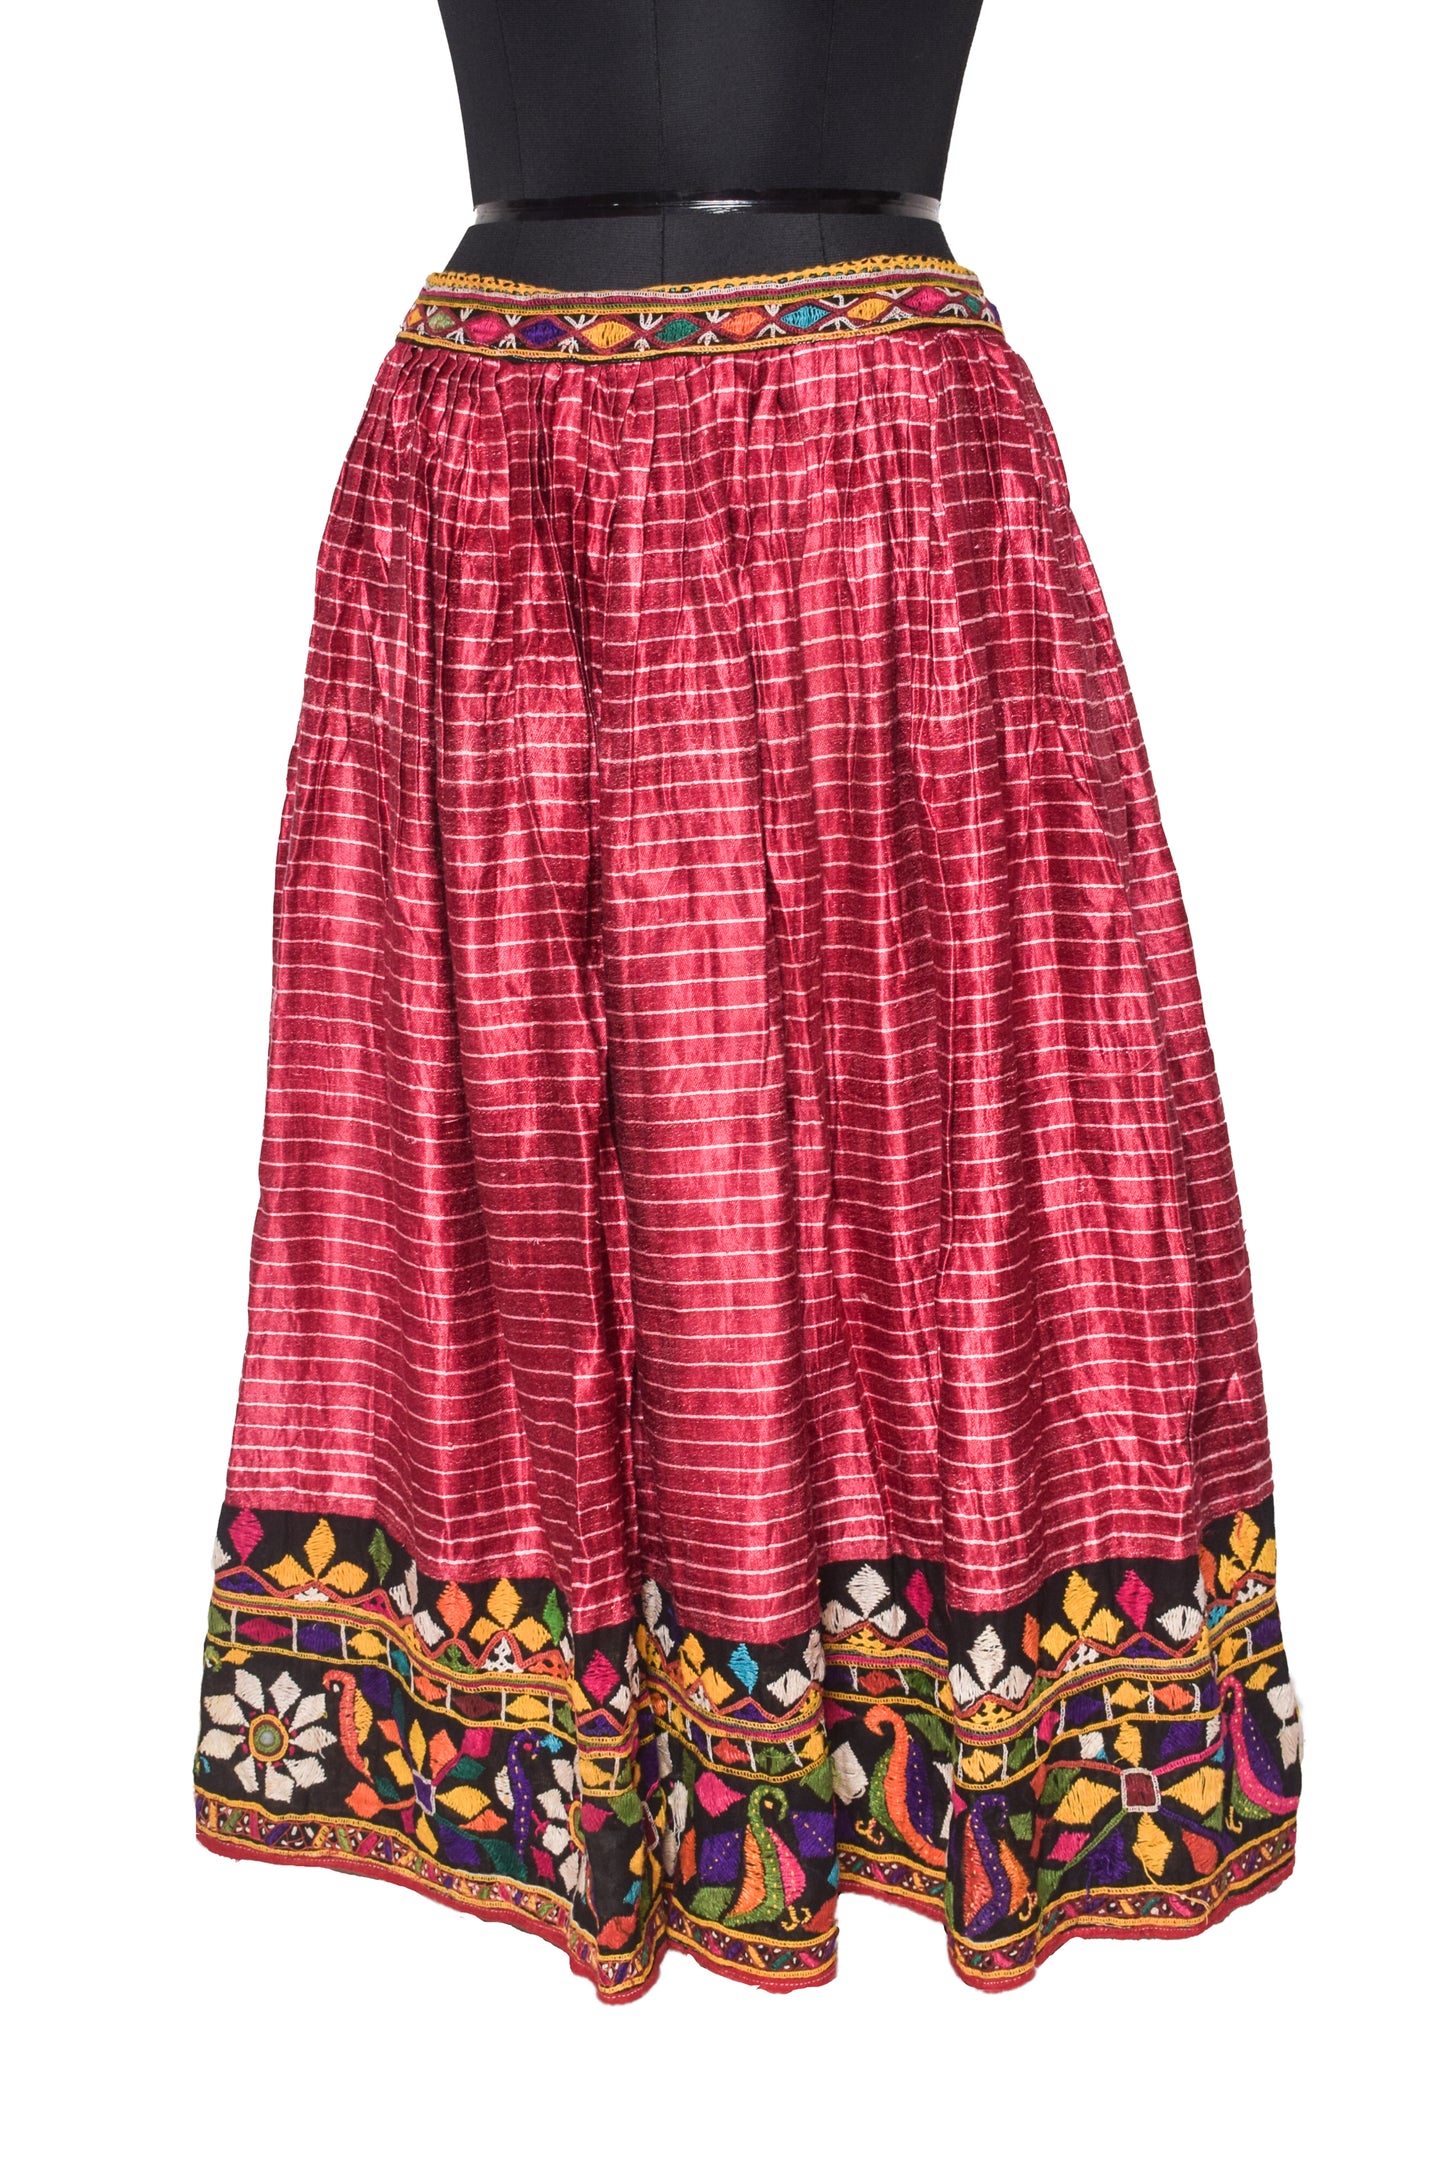 Ahir Work Mashru Silk Handloom Hand Embroidered Garba Skirt   - 3 Mtr Flare (Gher)    -  SKU : SD09801A